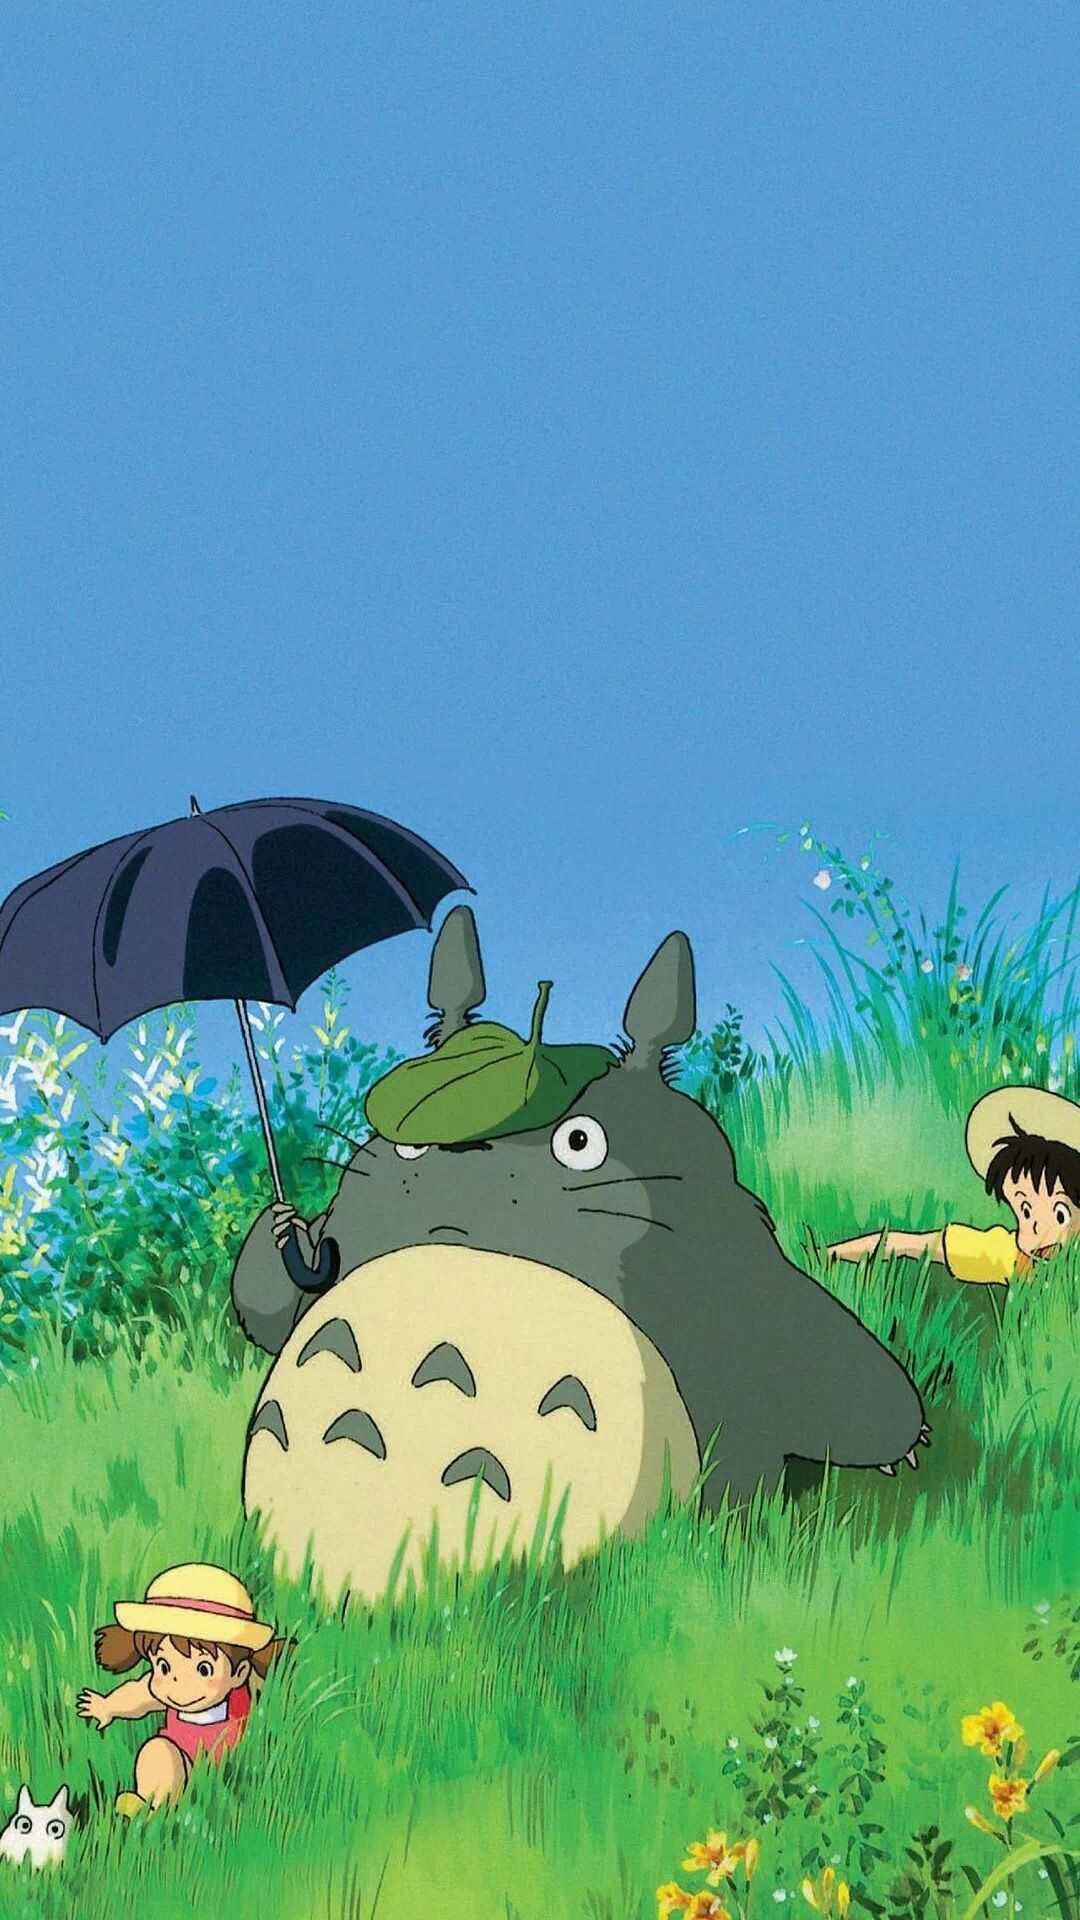 Studio Ghibli: My Neighbor Totoro has grossed over $41 million worldwide at the box office. 1080x1920 Full HD Wallpaper.